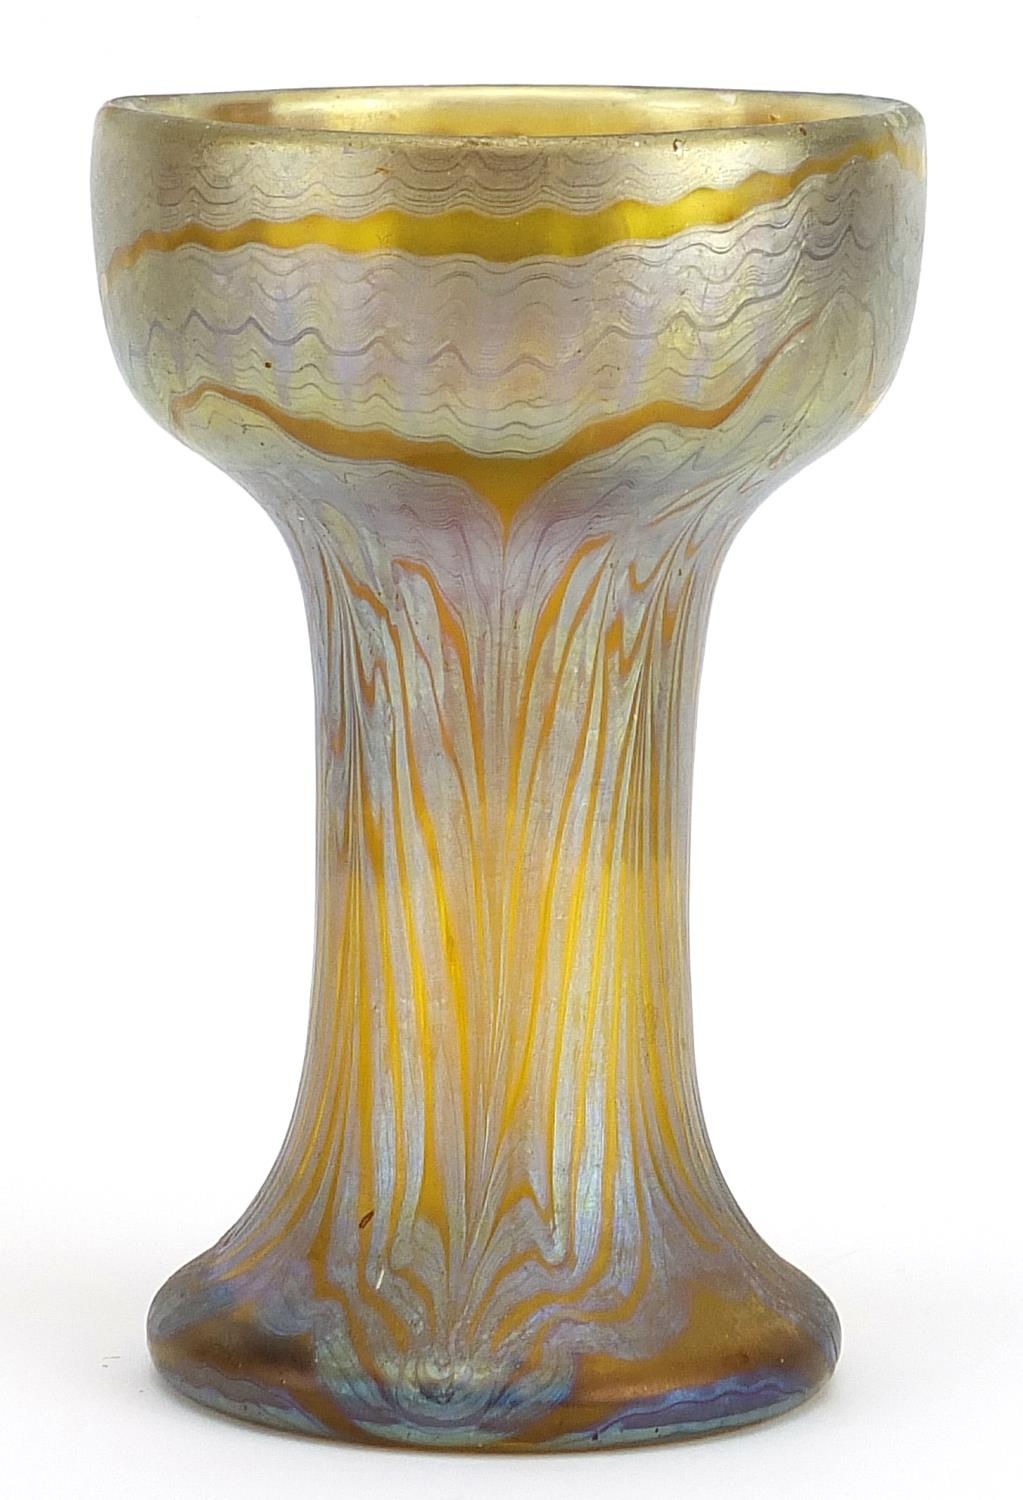 Loetz, Bohemian Art Nouveau Phaenomen glass vase signed Loetz Austria to the base, 16cm high - Image 2 of 3